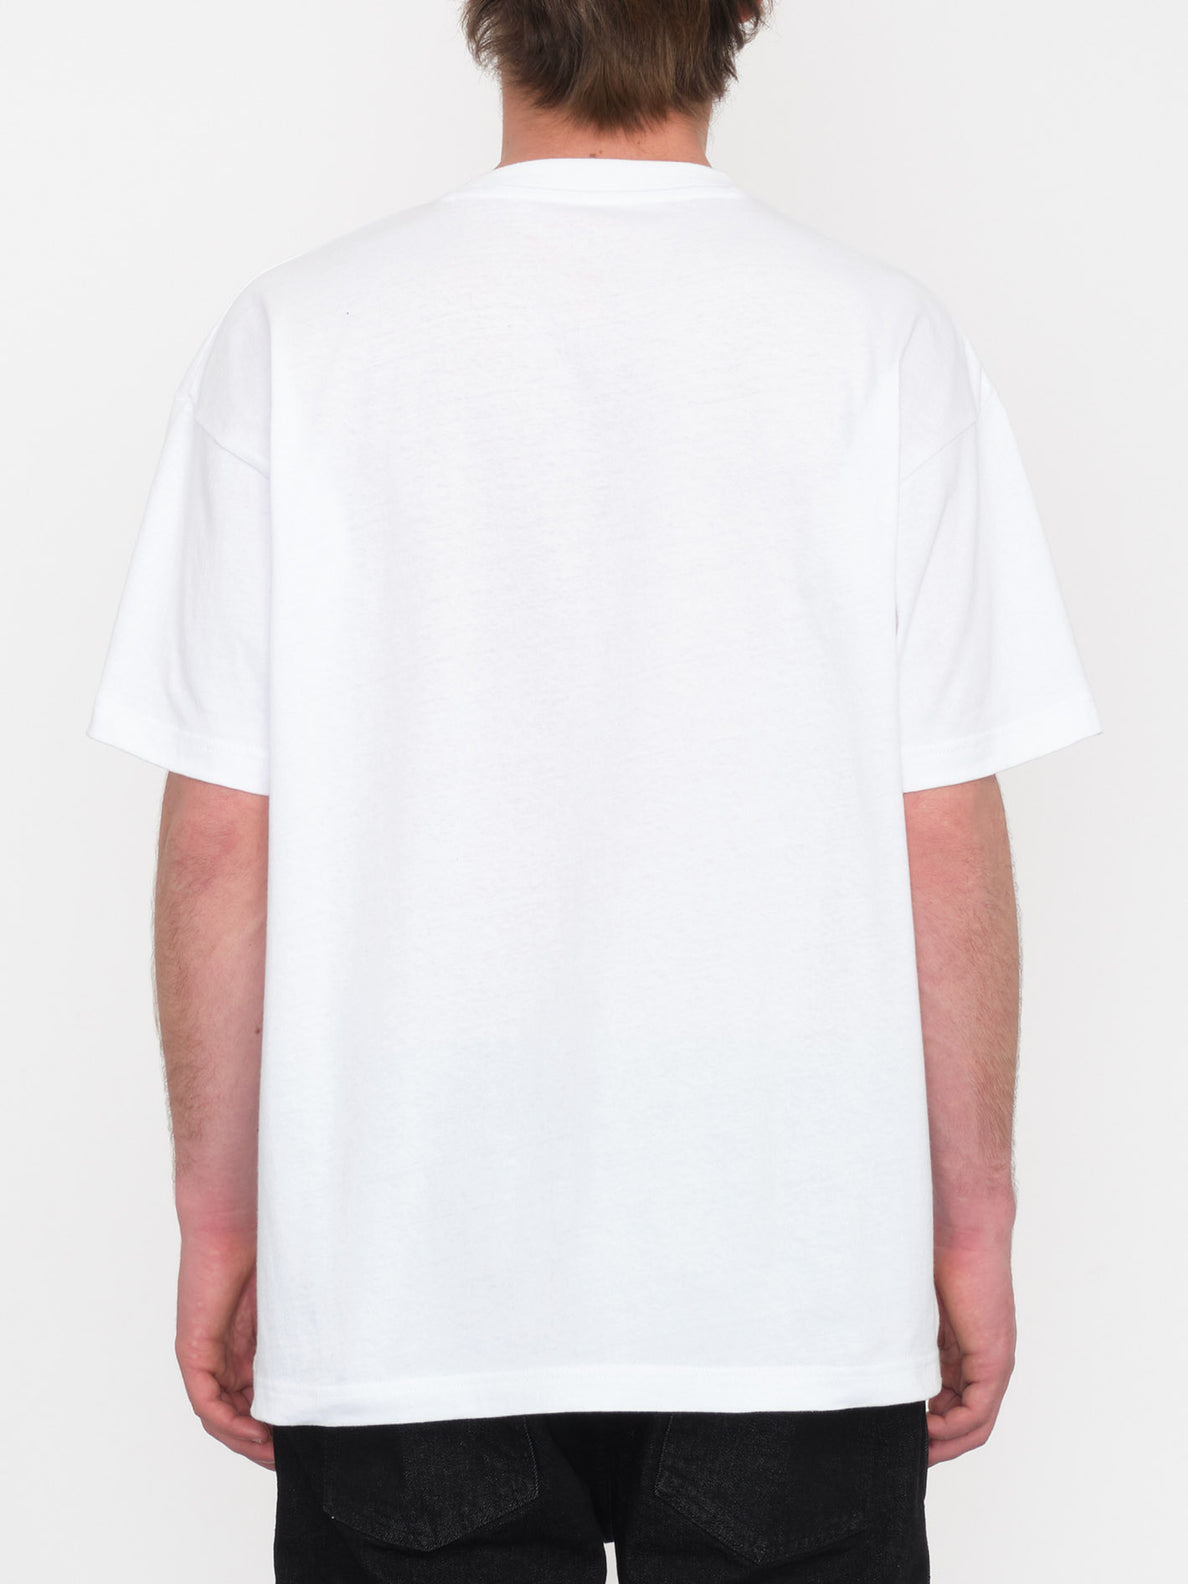 Arthur Longo 2 T-Shirt - WHITE